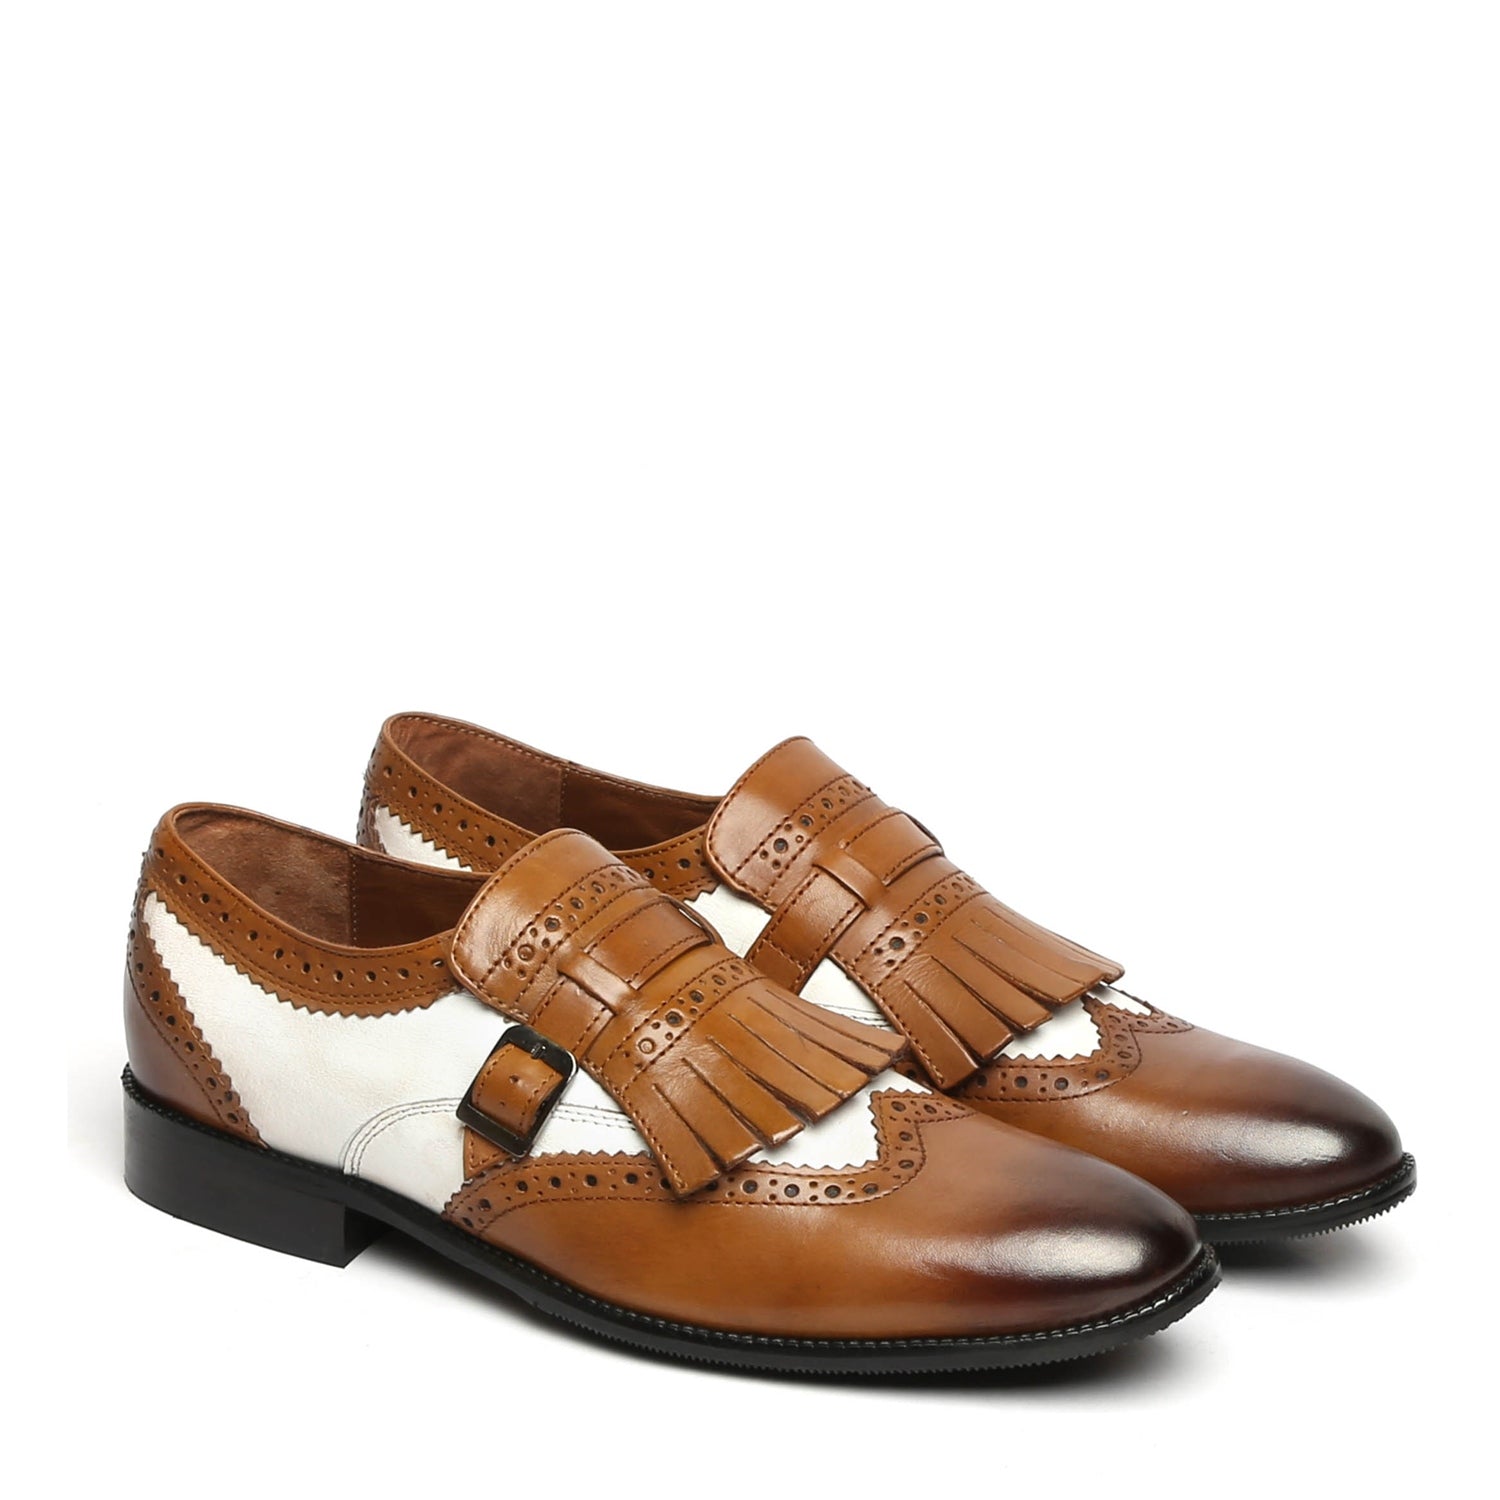 Tan/White Leather Fringed Single Monk Strap Shoes By Brune & Bareskin